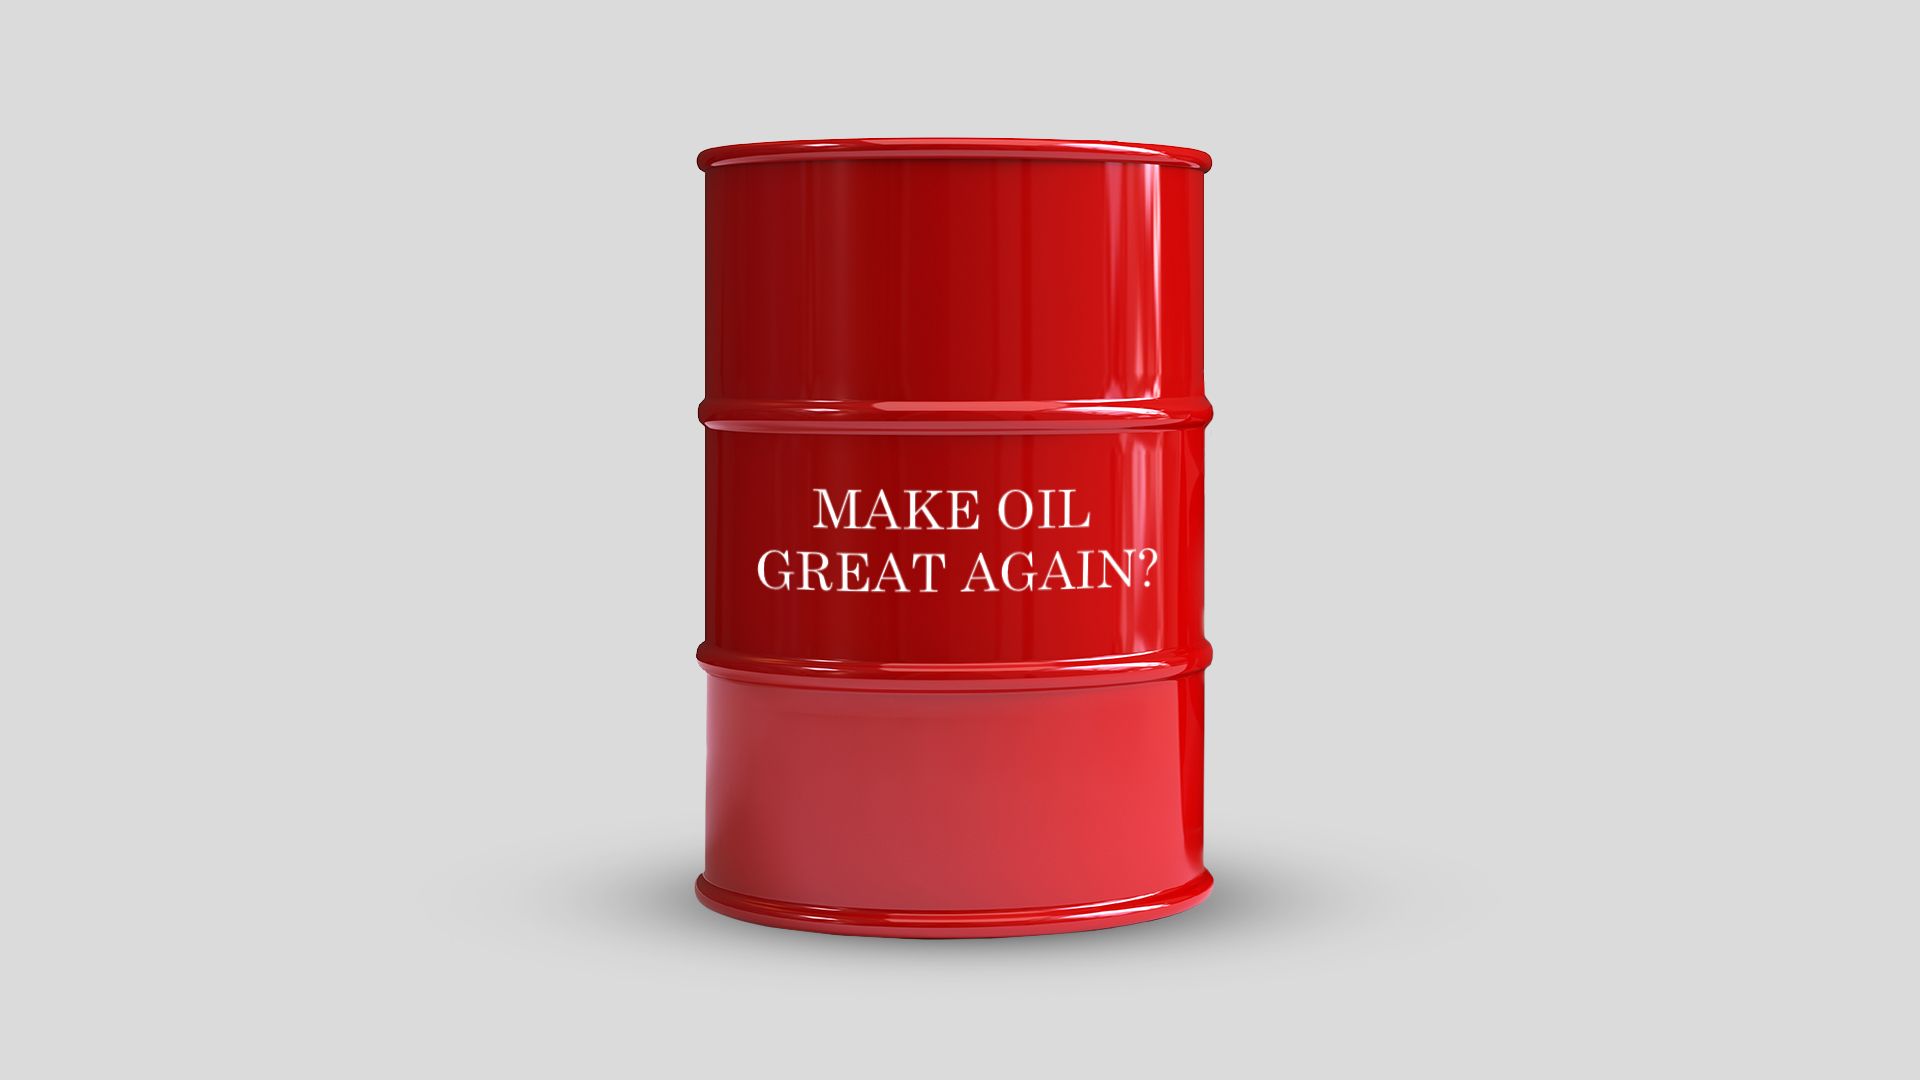 Illustration of oil barrel that says "Make oil great again?"